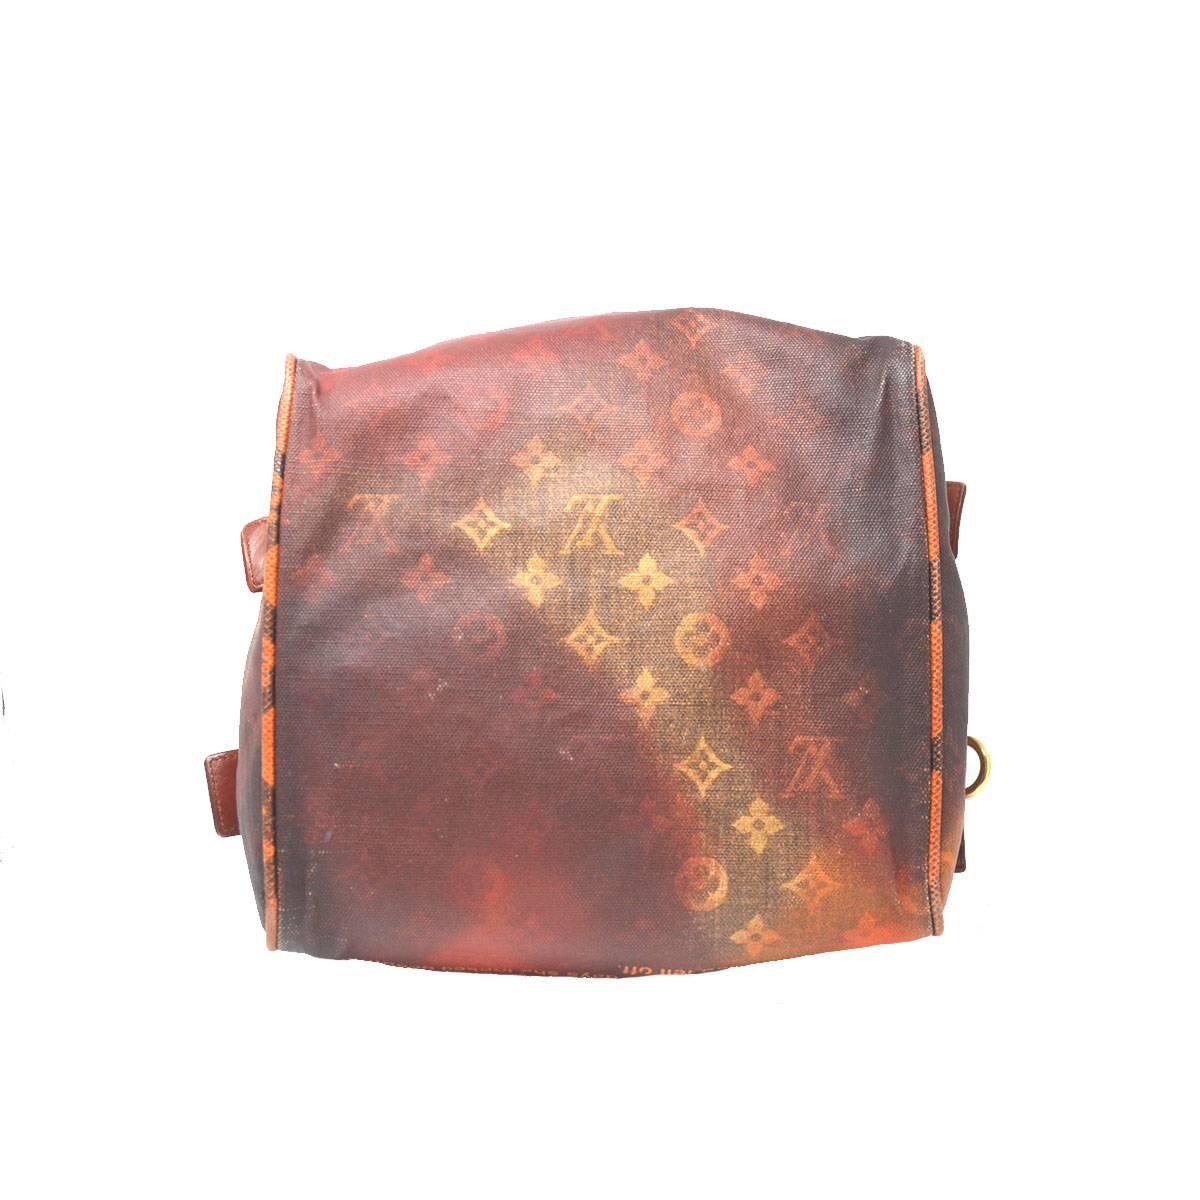 Brown Louis Vuitton Richard Prince MANCRAZY Printemps Jokes Handbag